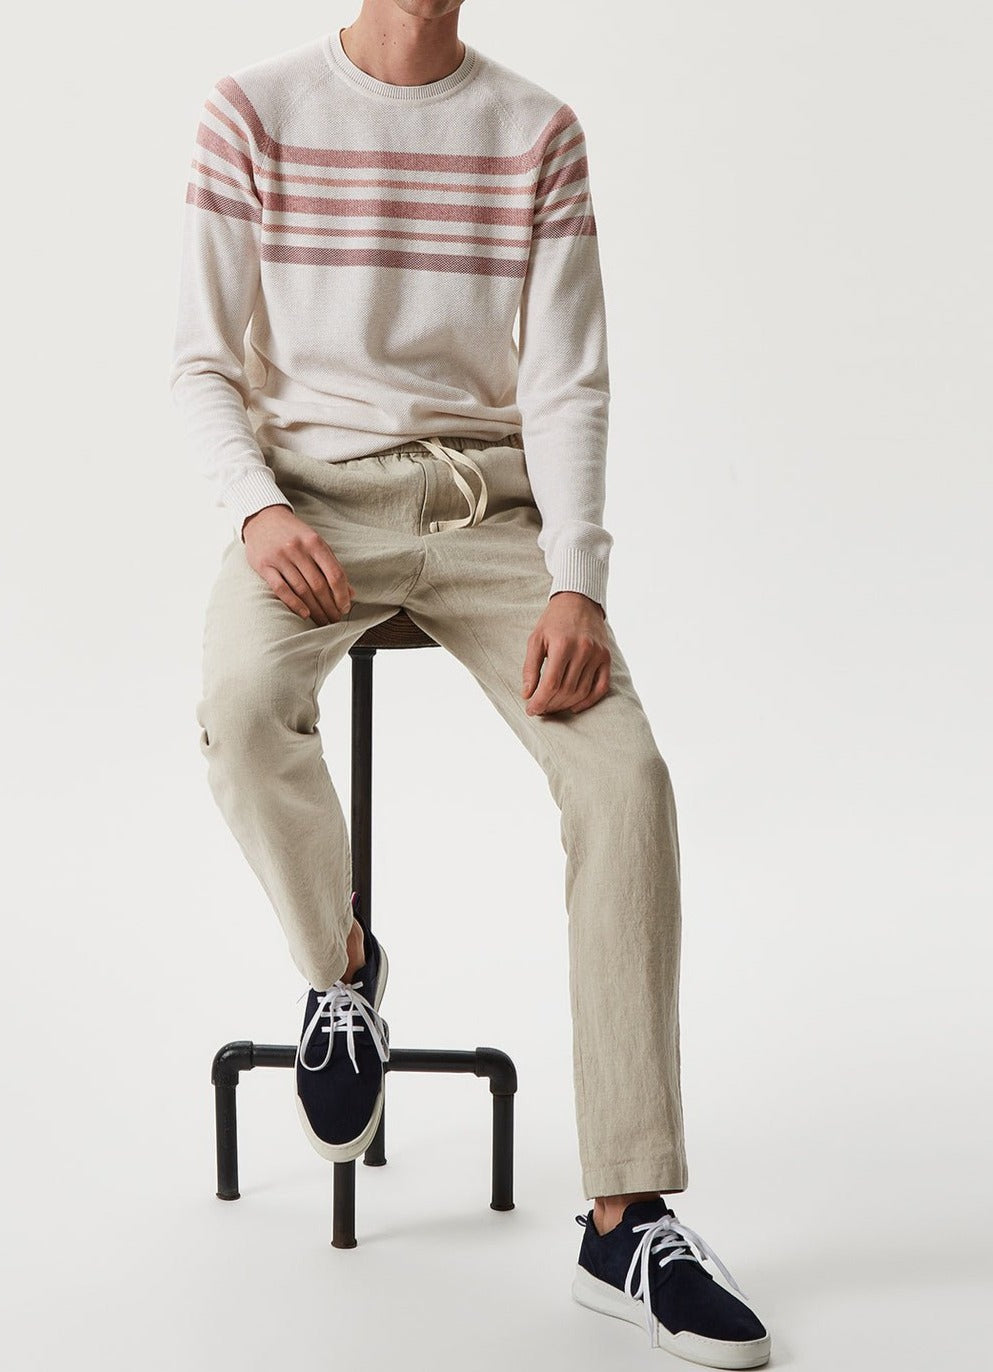 Men Jersey | White/Pink Striped Sweater With Ranglan Sleeve by Spanish designer Adolfo Dominguez